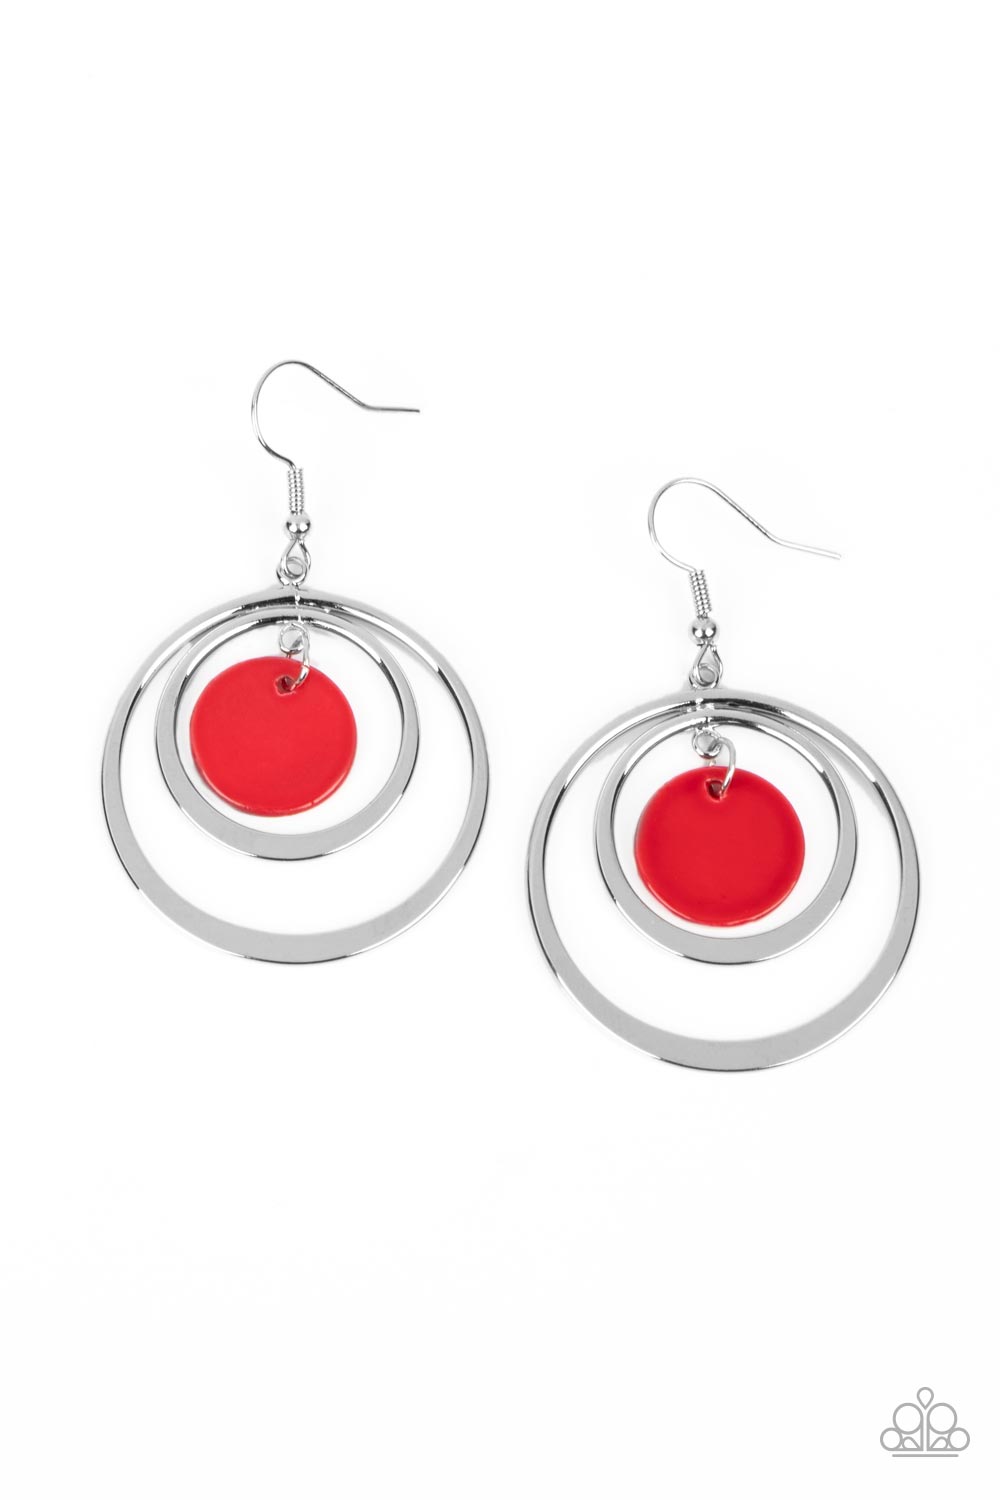 Mai Tai Tango Red Earrings - Paparazzi Accessories- lightbox - CarasShop.com - $5 Jewelry by Cara Jewels